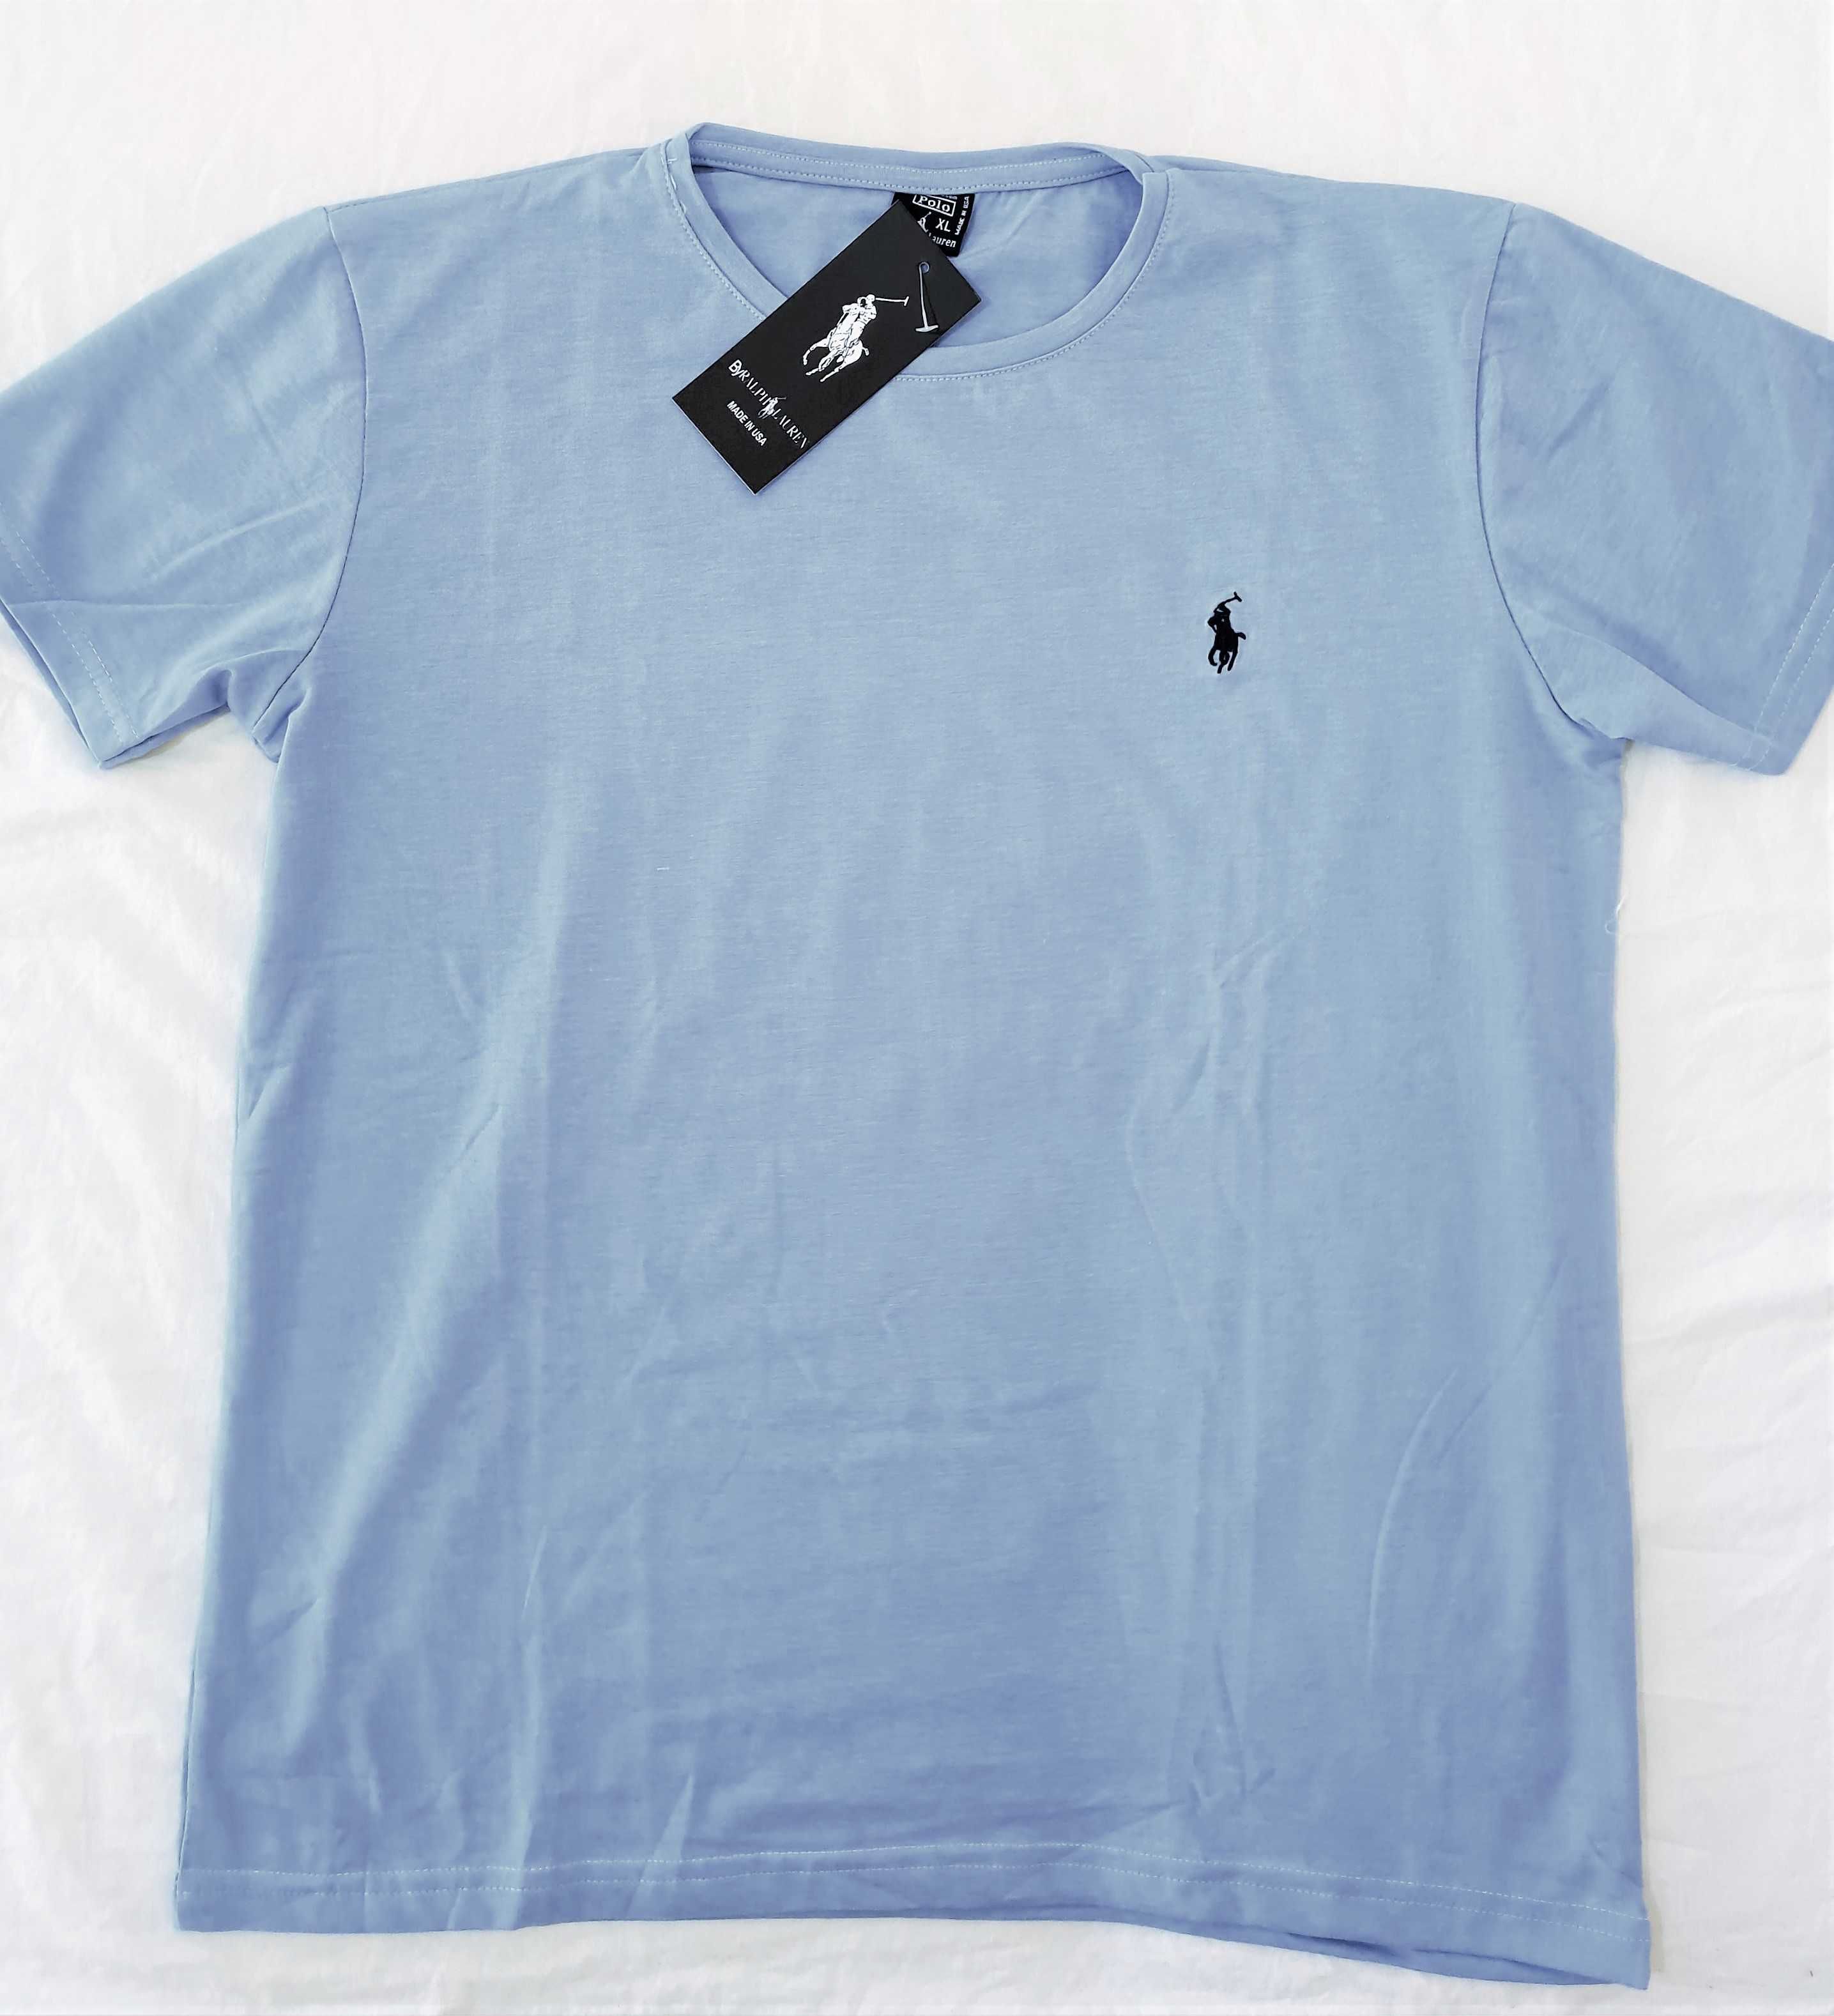 Nowa błękitna koszulka RALP LAUREN okazja super prezent XL SUPER KOLOR